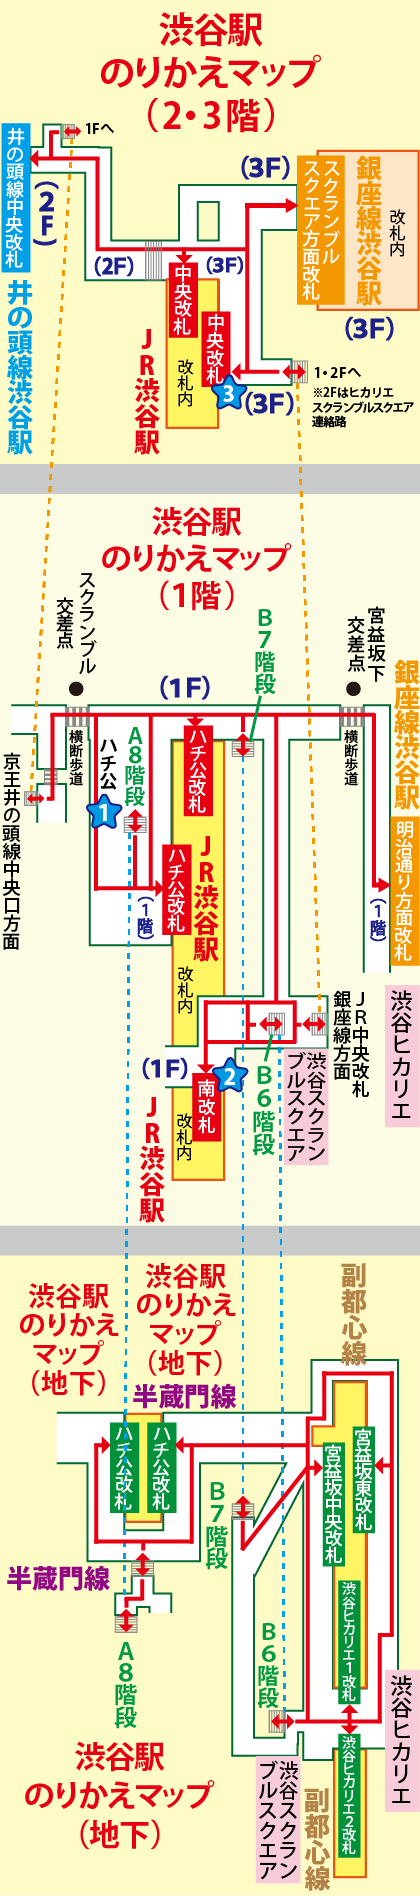 JR渋谷駅の構内図と待ち合わせ場所マップ